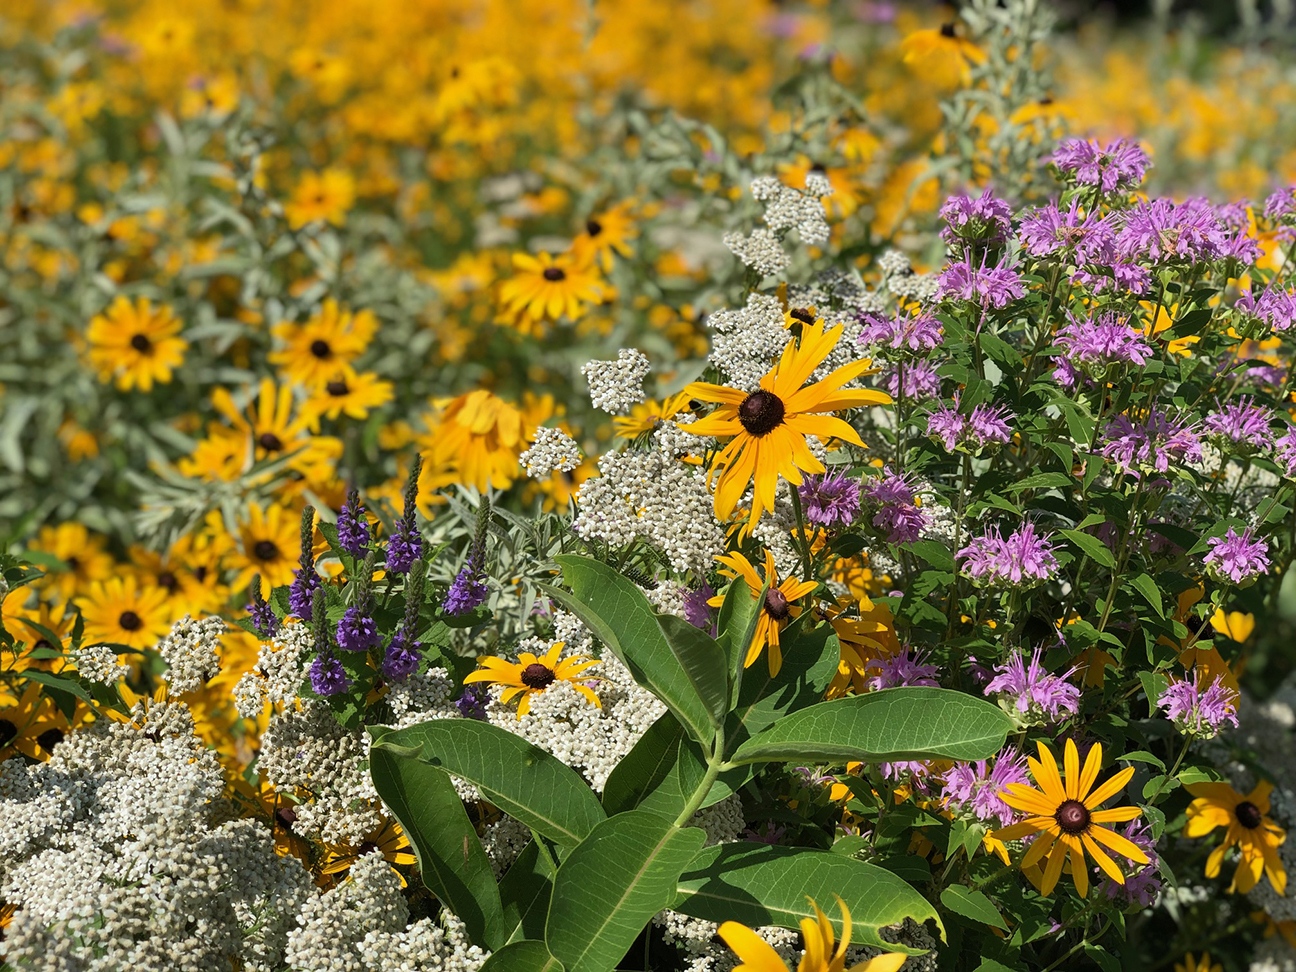 Native pollinator flowers